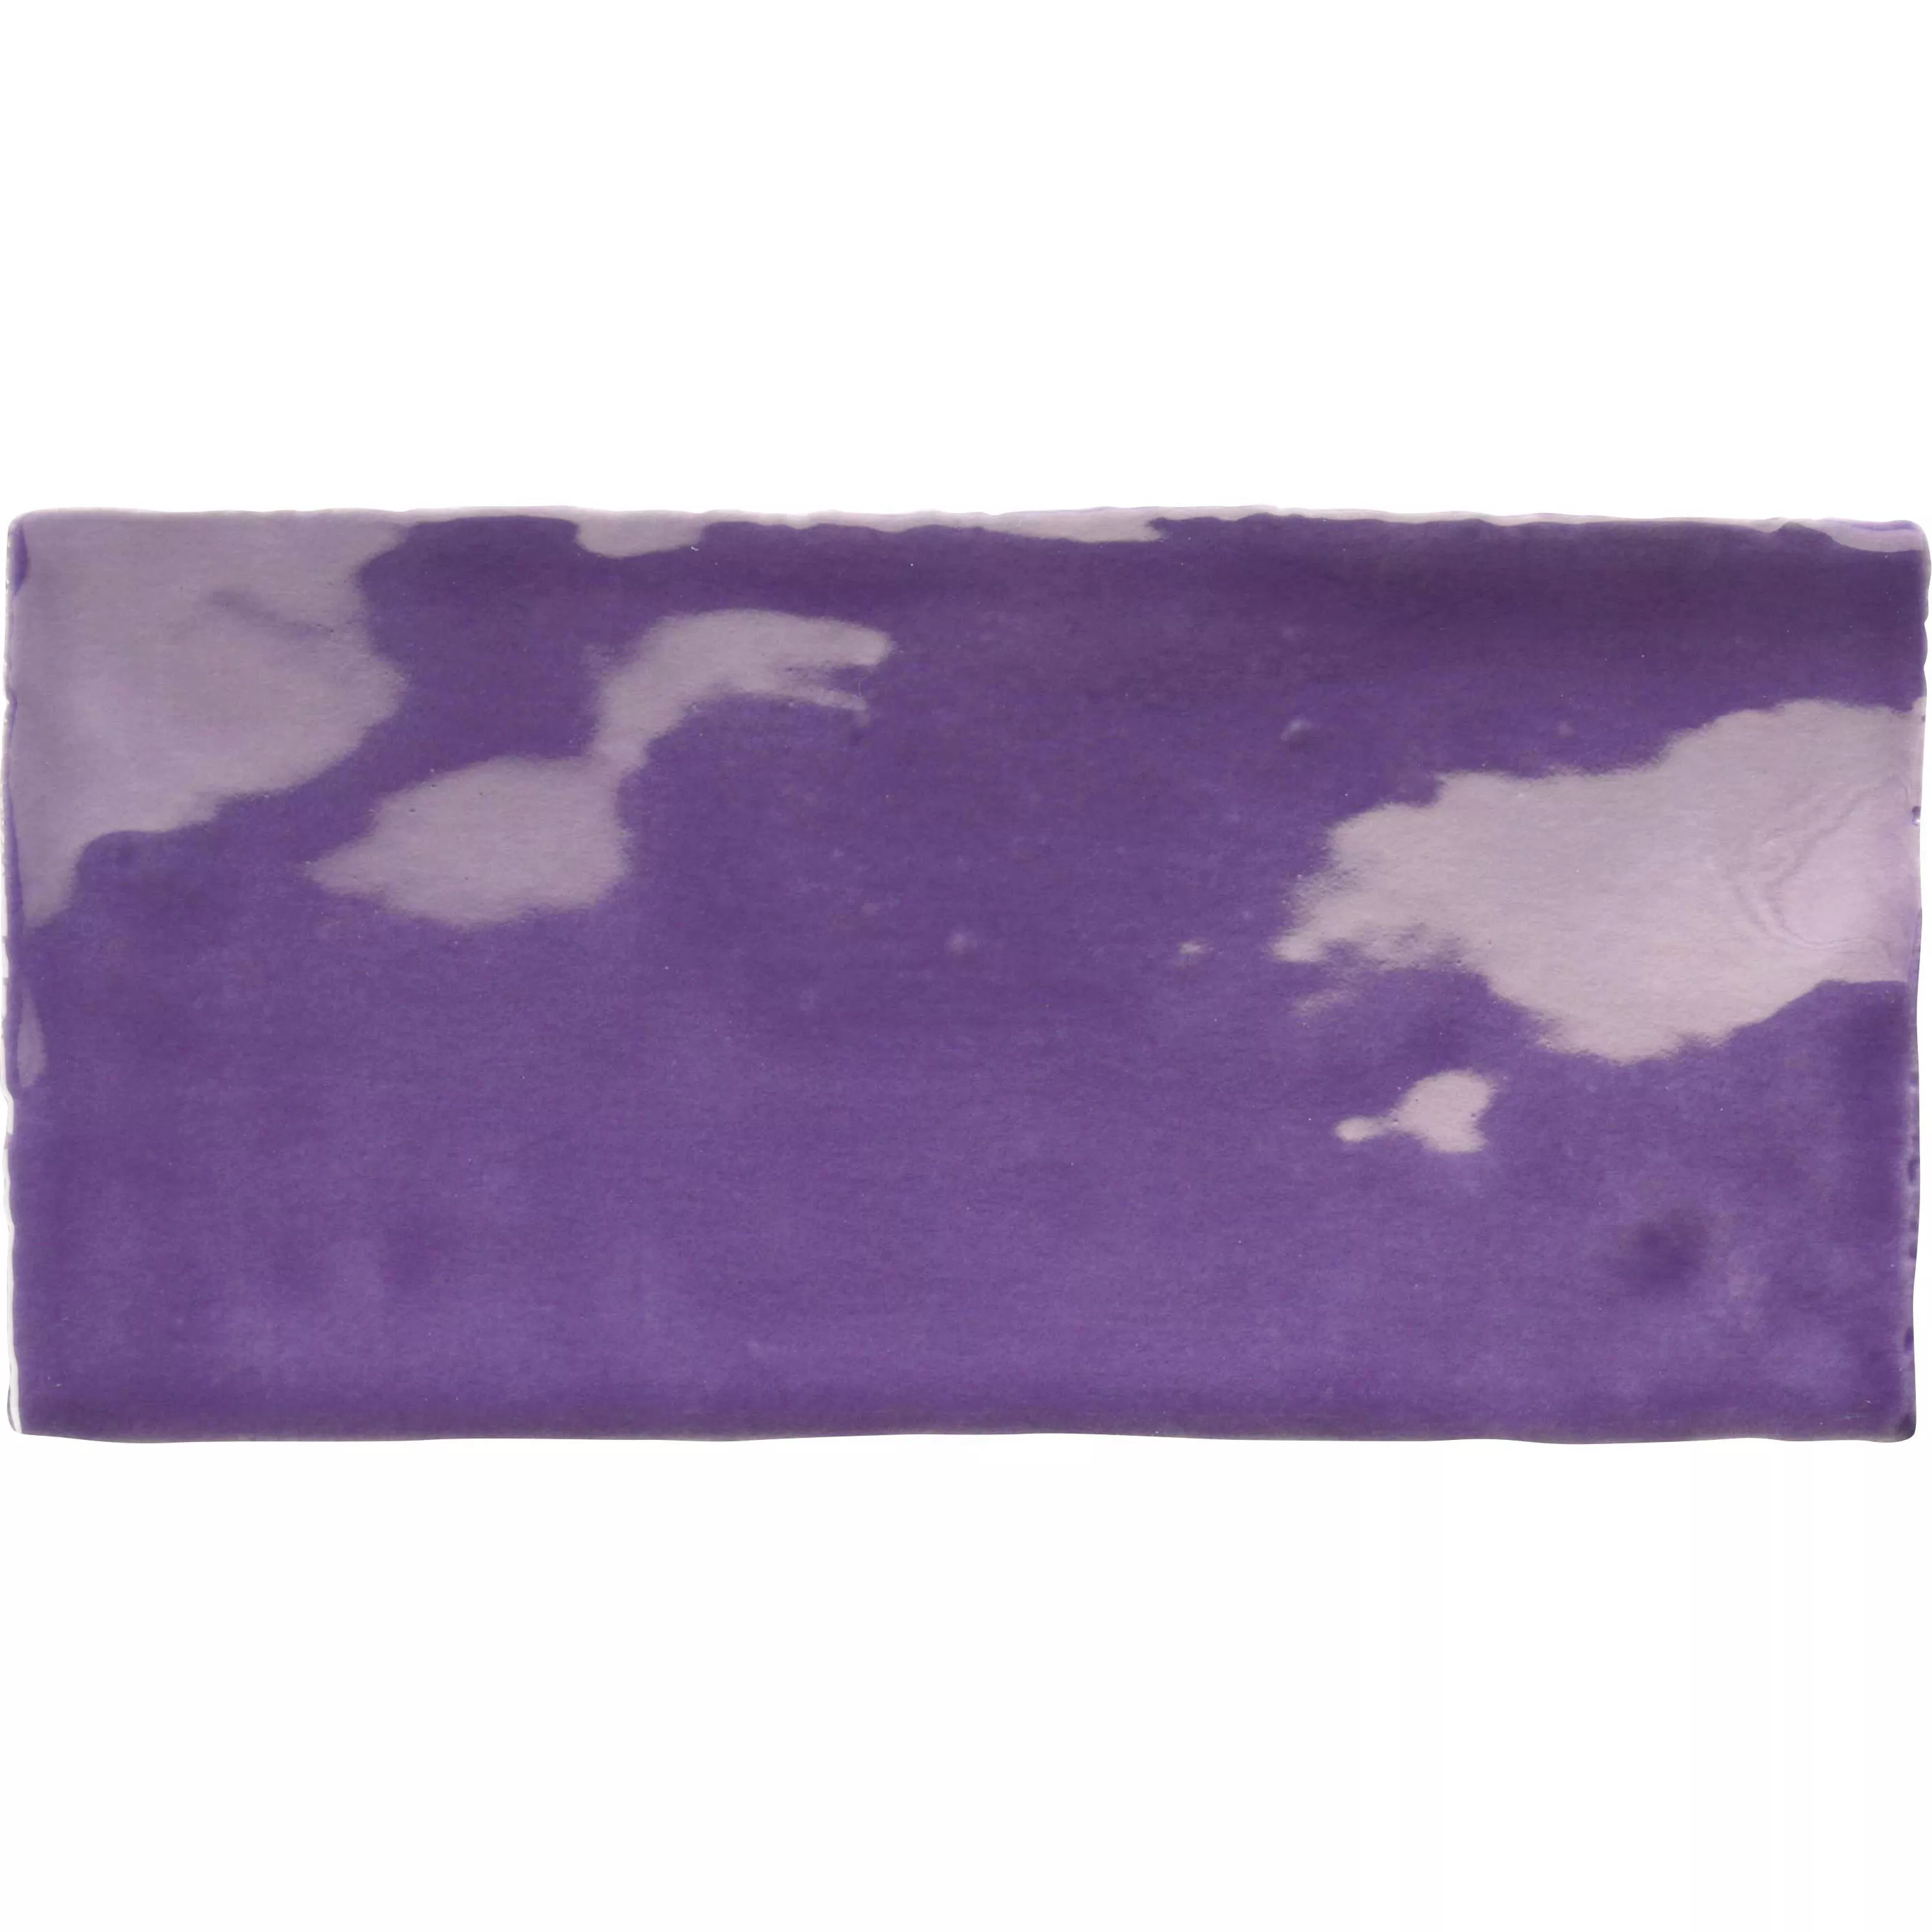 Muestra Revestimiento Algier Hecho A Mano 7,5x15cm Púrpura